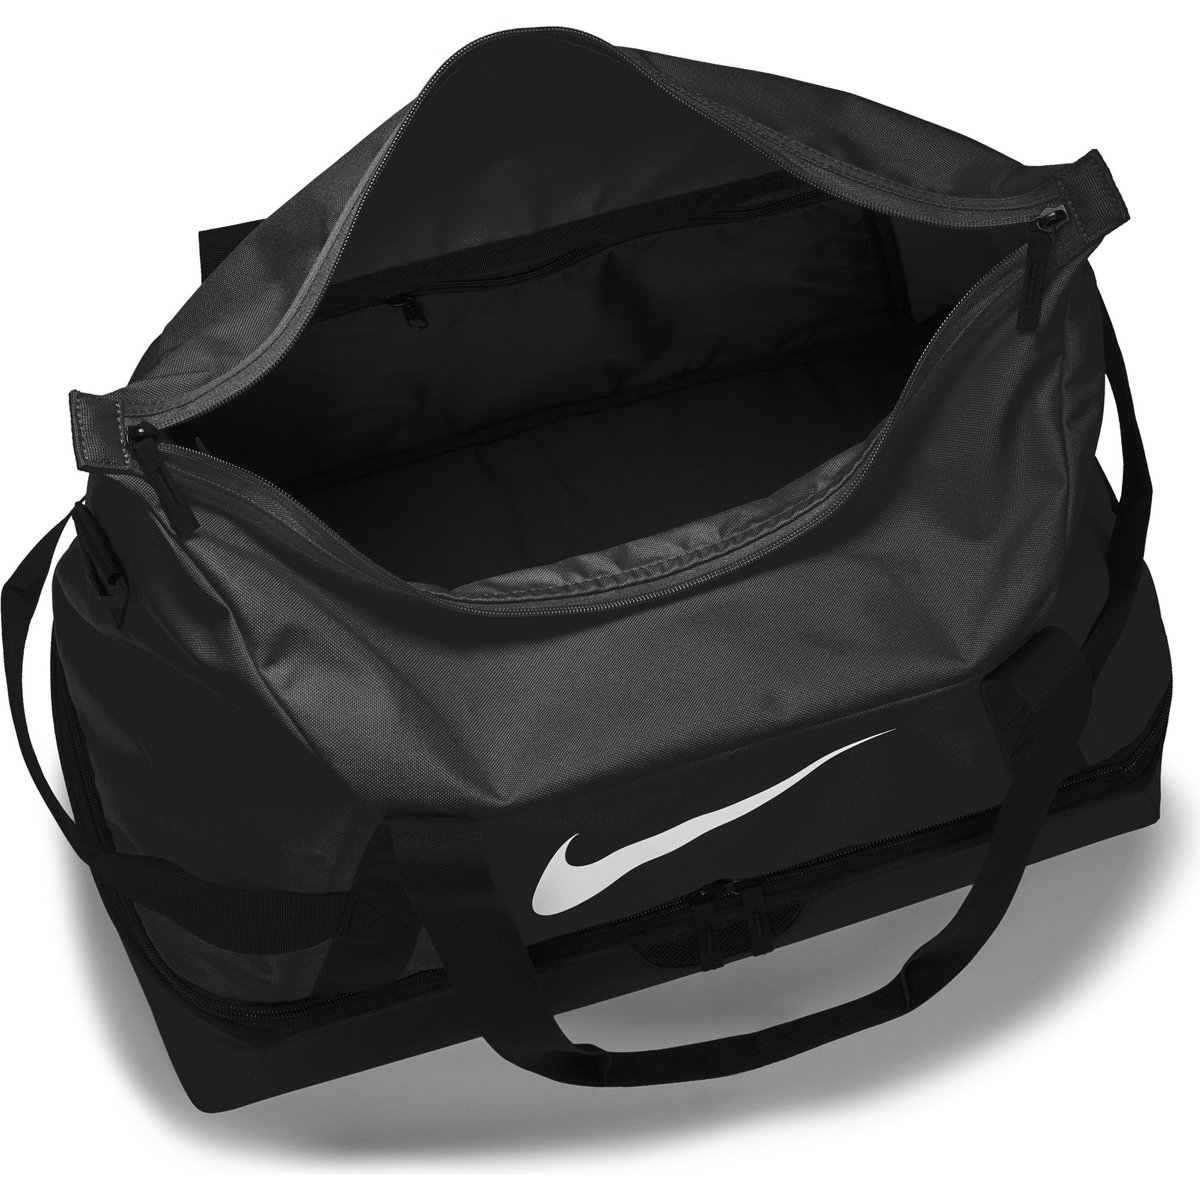 The Nike Academy Team Hardcase Bag is 